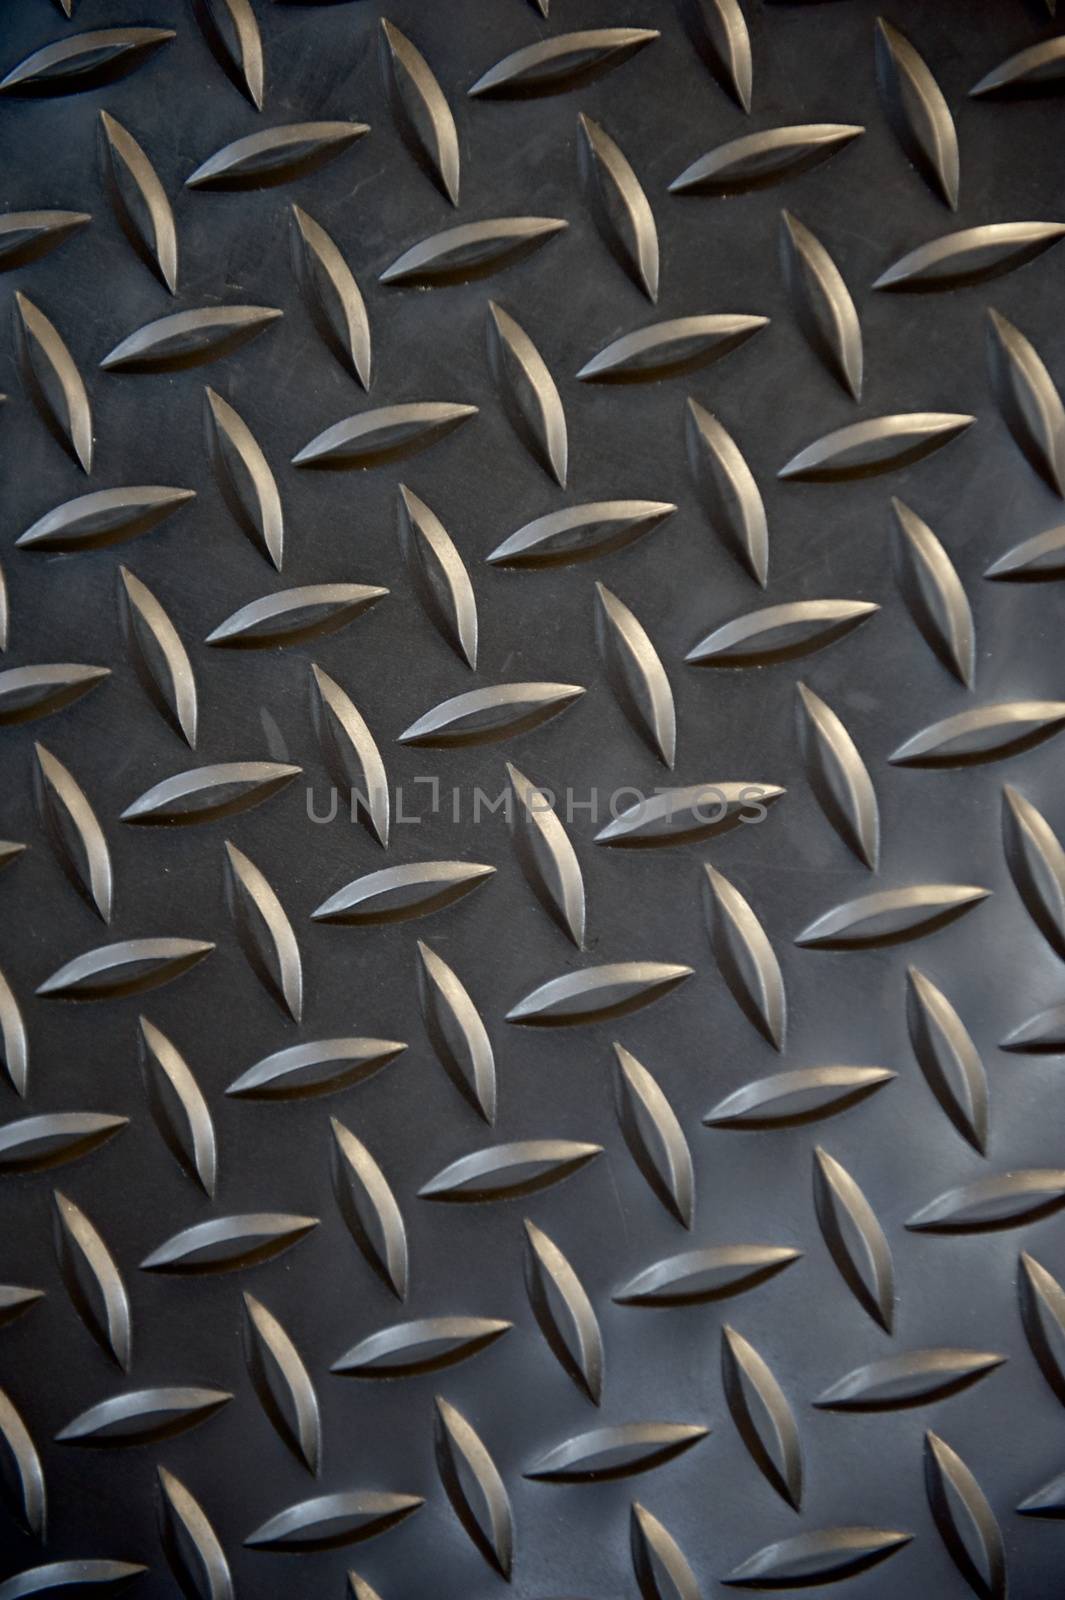 Black non-slip rubber mat with herringbone pattern